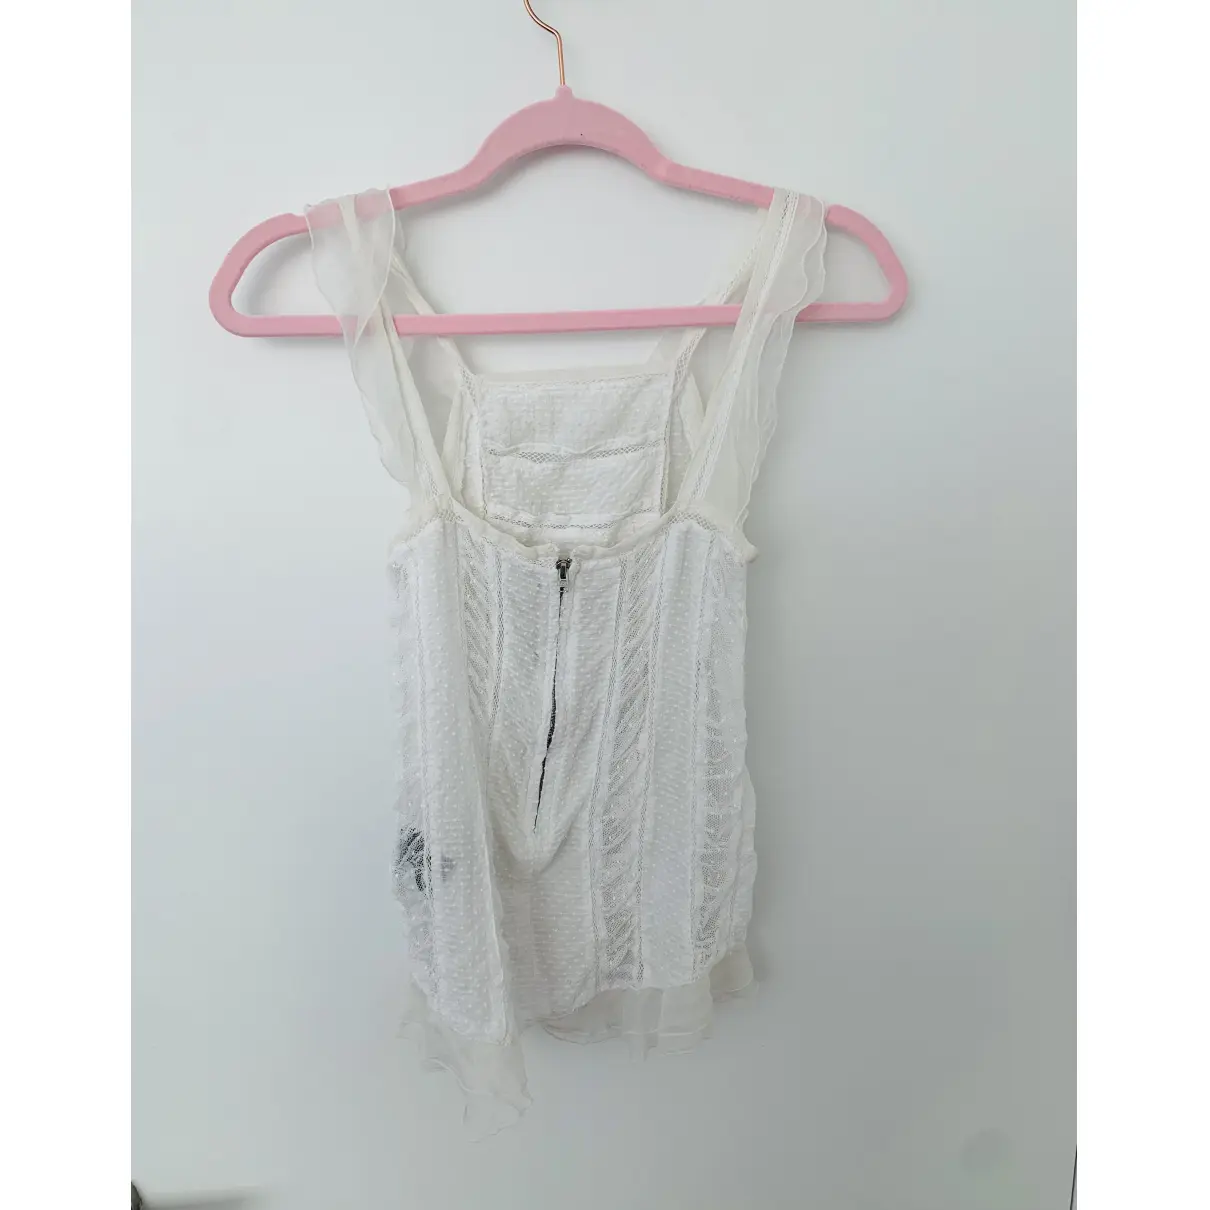 Buy Isabel Marant Silk camisole online